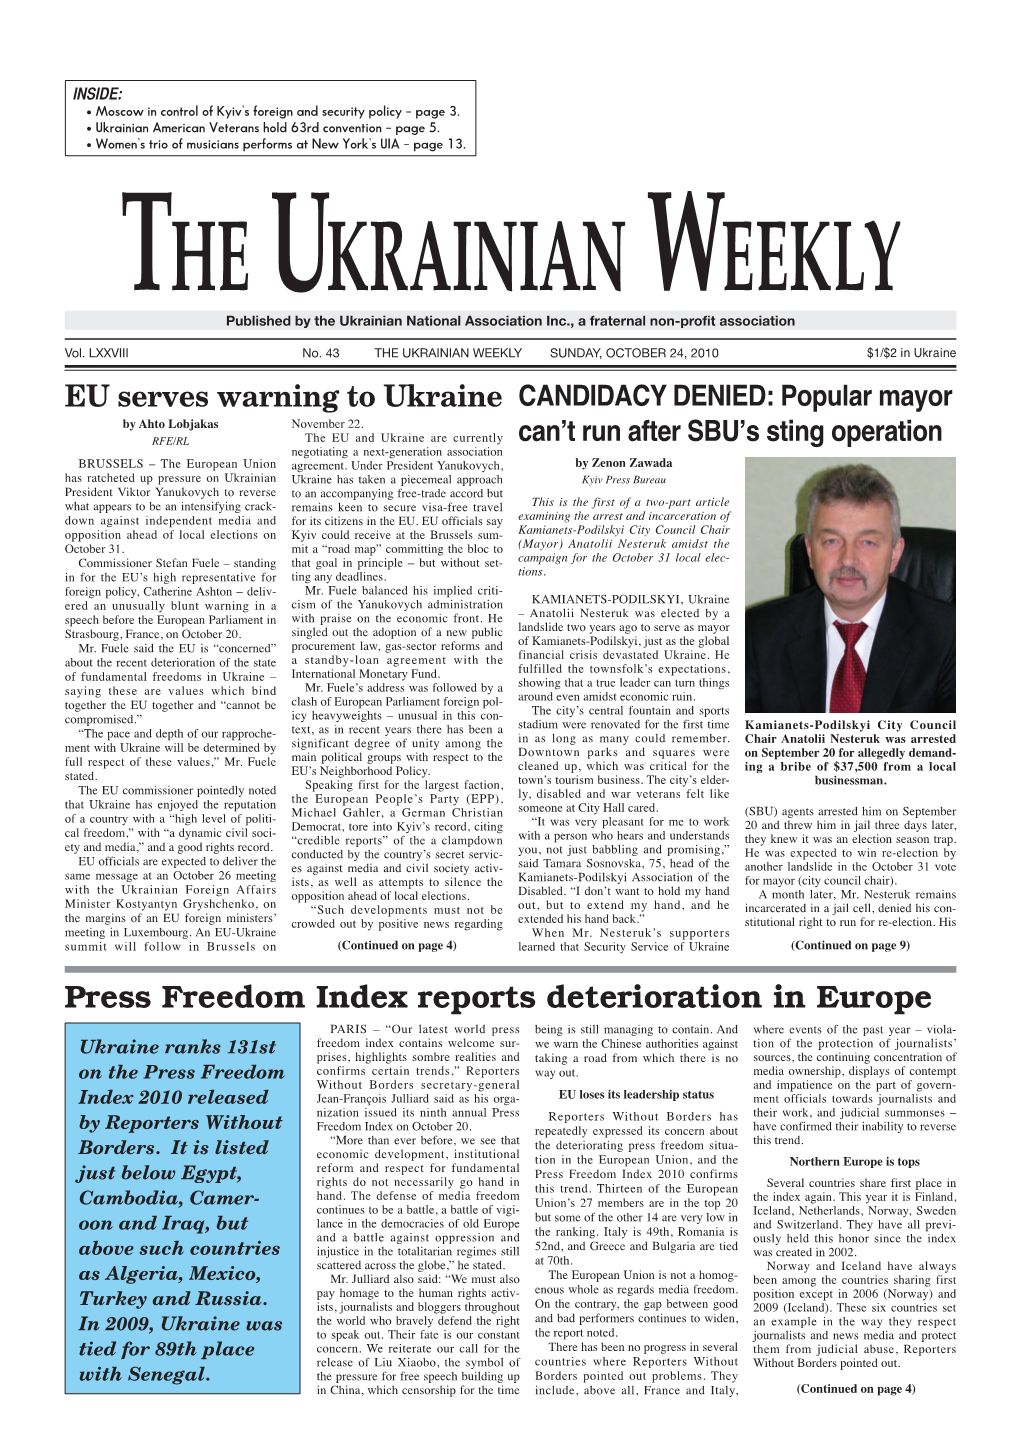 The Ukrainian Weekly 2010, No.43